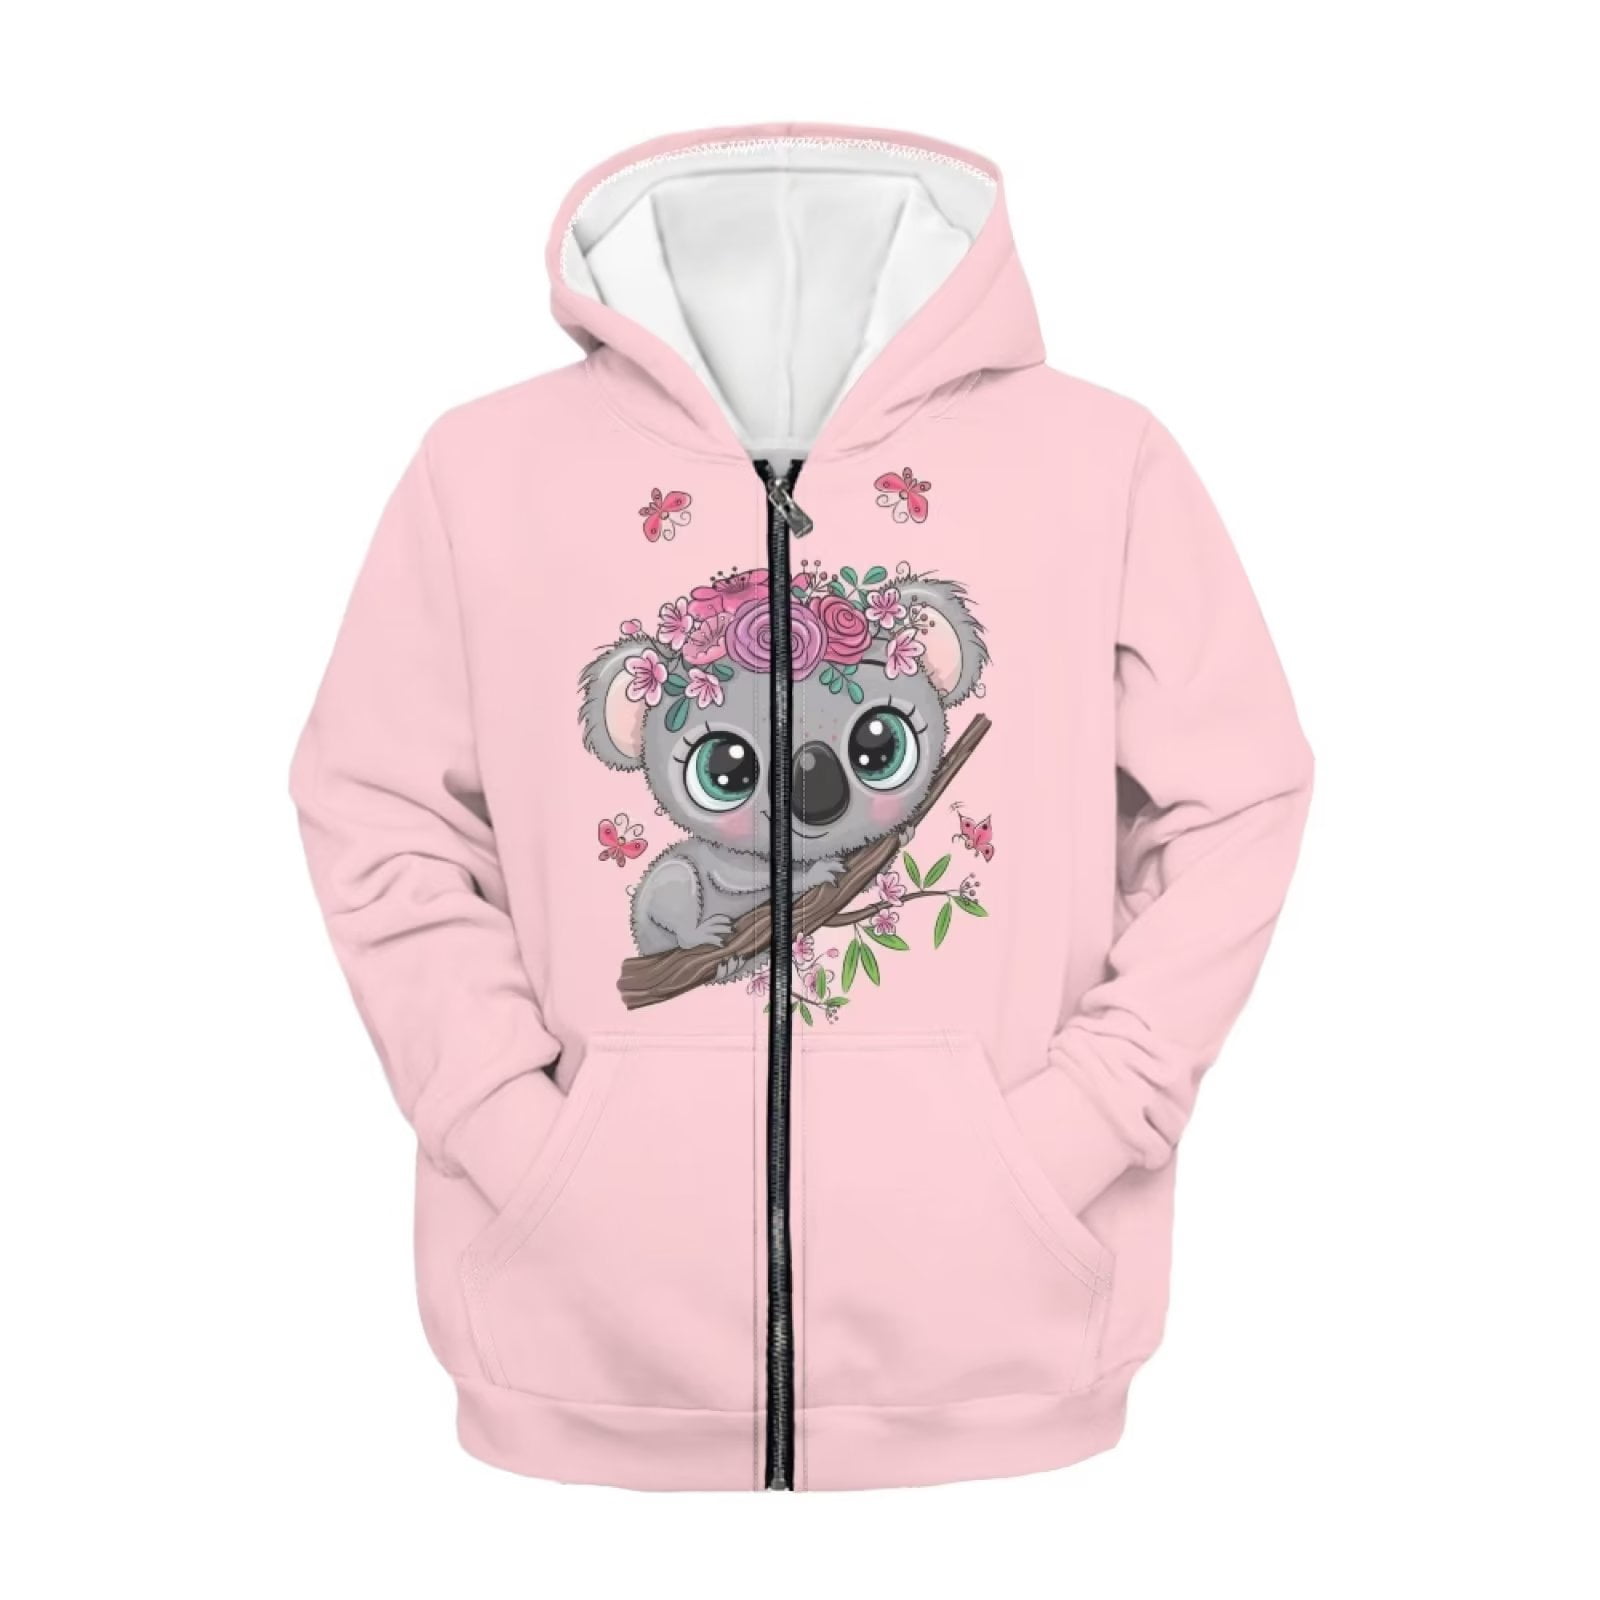 Renewold Rose Panda Zip Up Sweatshirt Hoodies Jacket for Teen Girls Soft  Pink Hoody Sports Outfits Size 11-13 Years Old Y2K Streetwear Volleyball  Clothing 